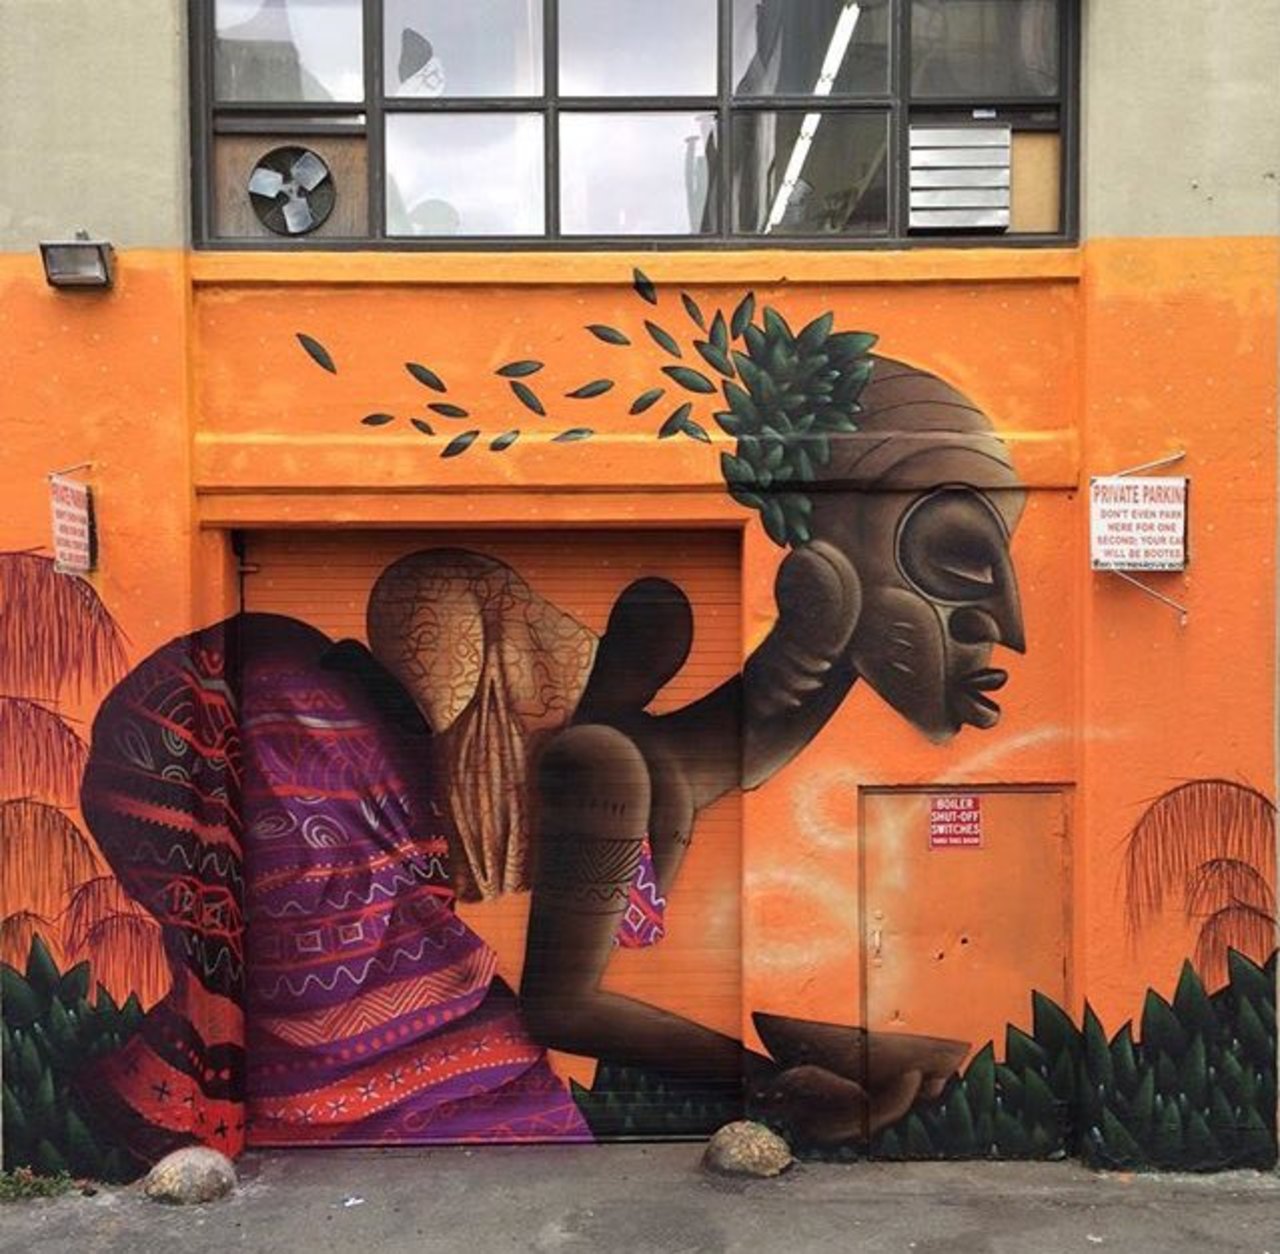 RT @BuildMyIdea: New Street Art by Alexandre Keto in NYC 

#art #graffiti #mural #streetart https://t.co/COXl4dyPRG